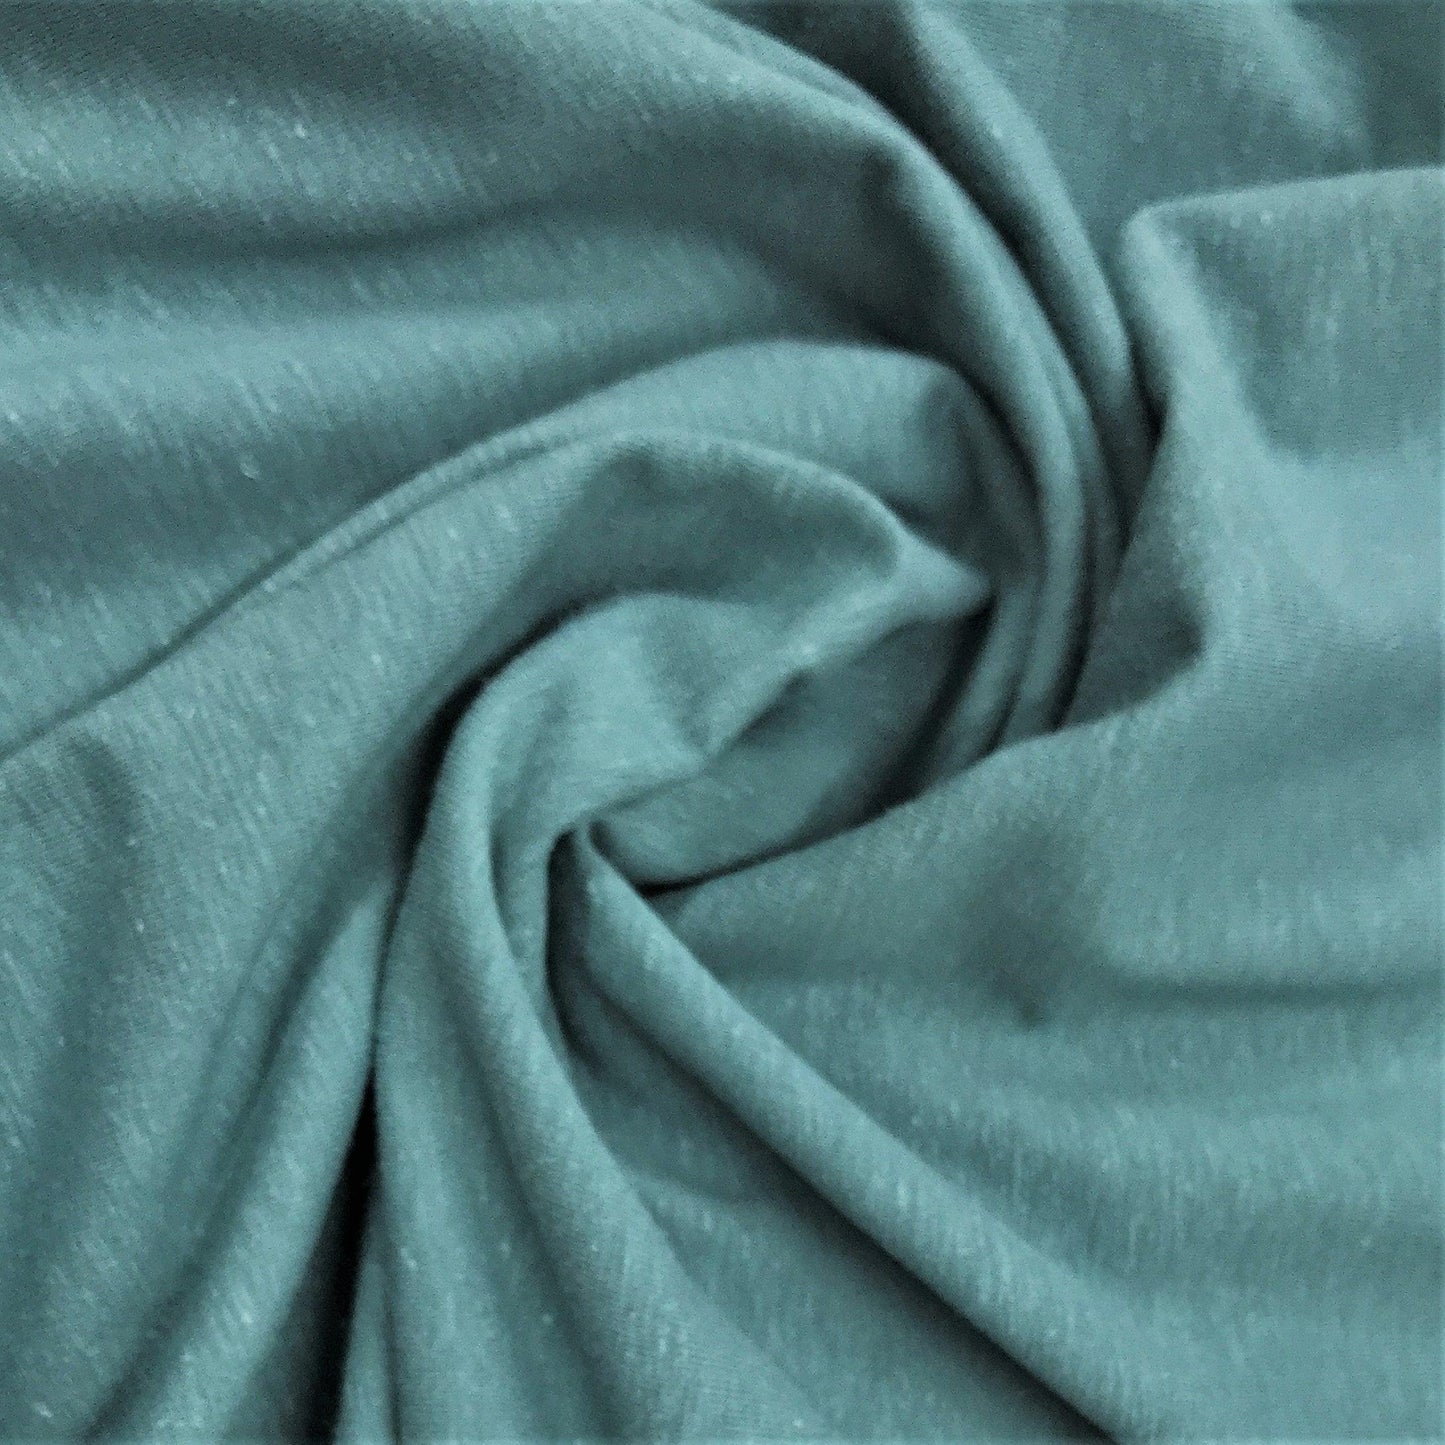 Mineral Blue Hemp Stretch Jersey Fabric - 240 GSM -$13.70/yd, 15 yards - Nature's Fabrics